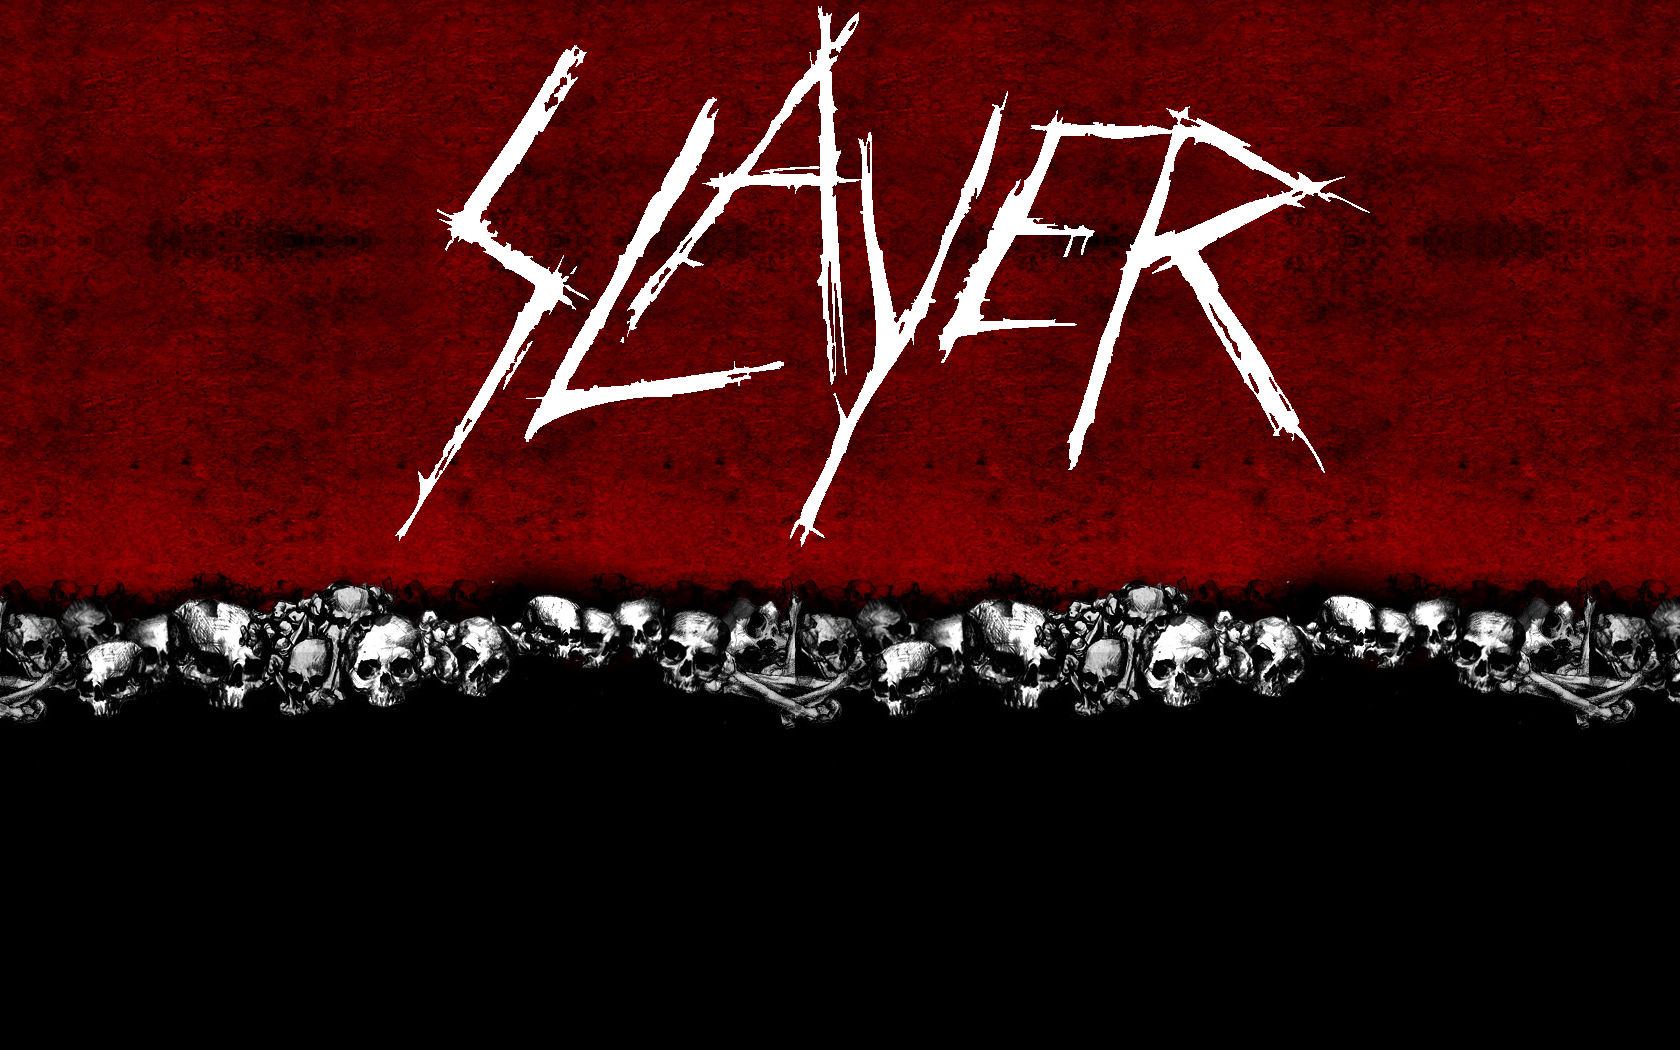 Slayer Band Wallpapers